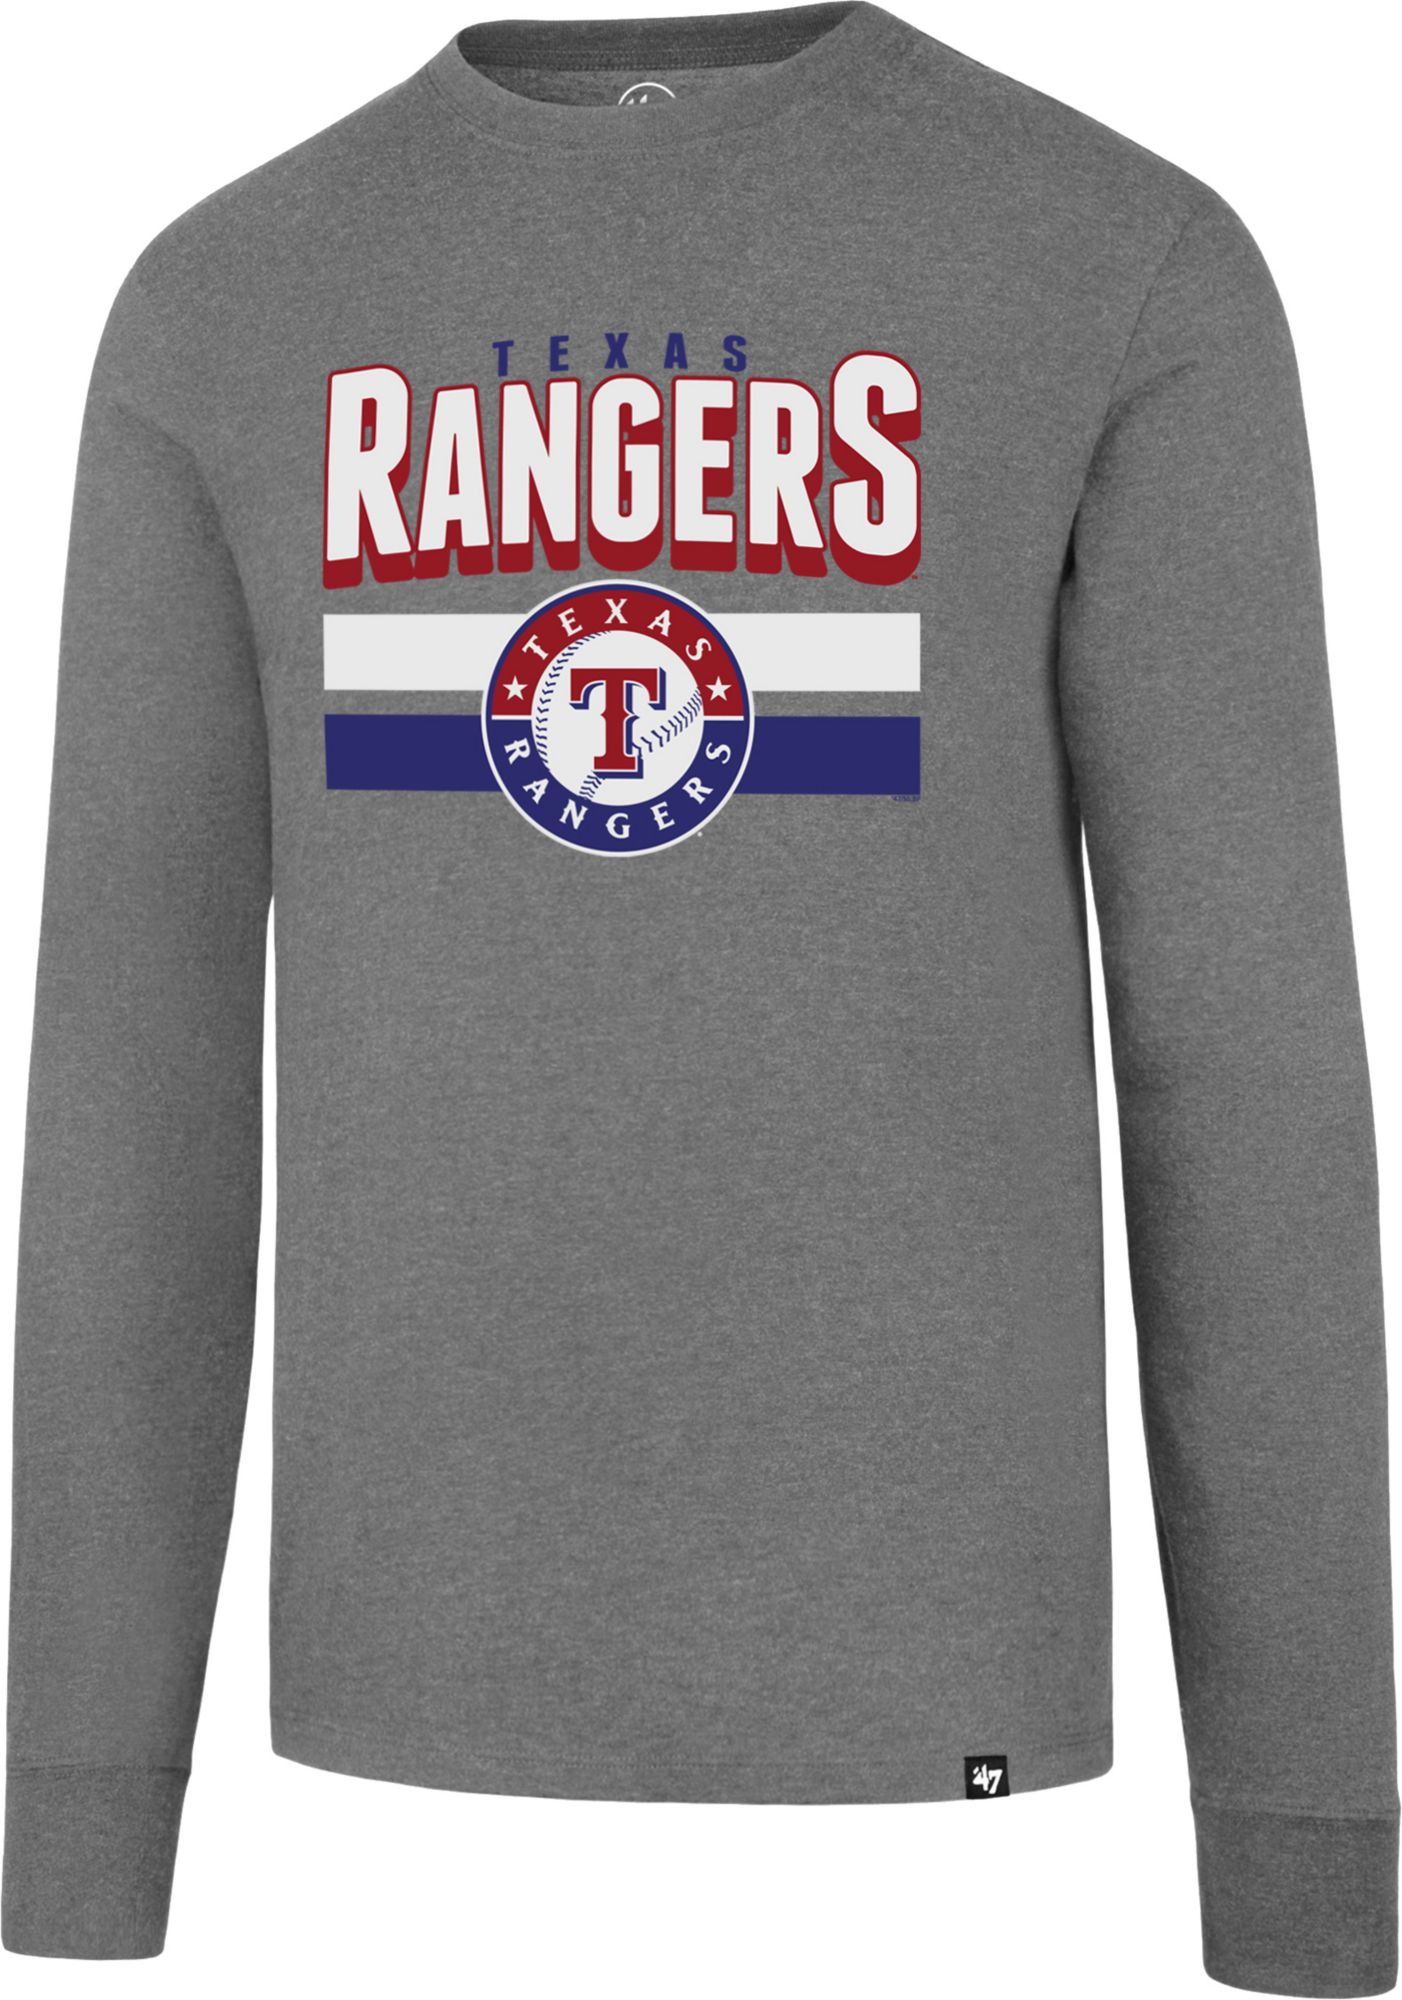 texas rangers long sleeve shirt